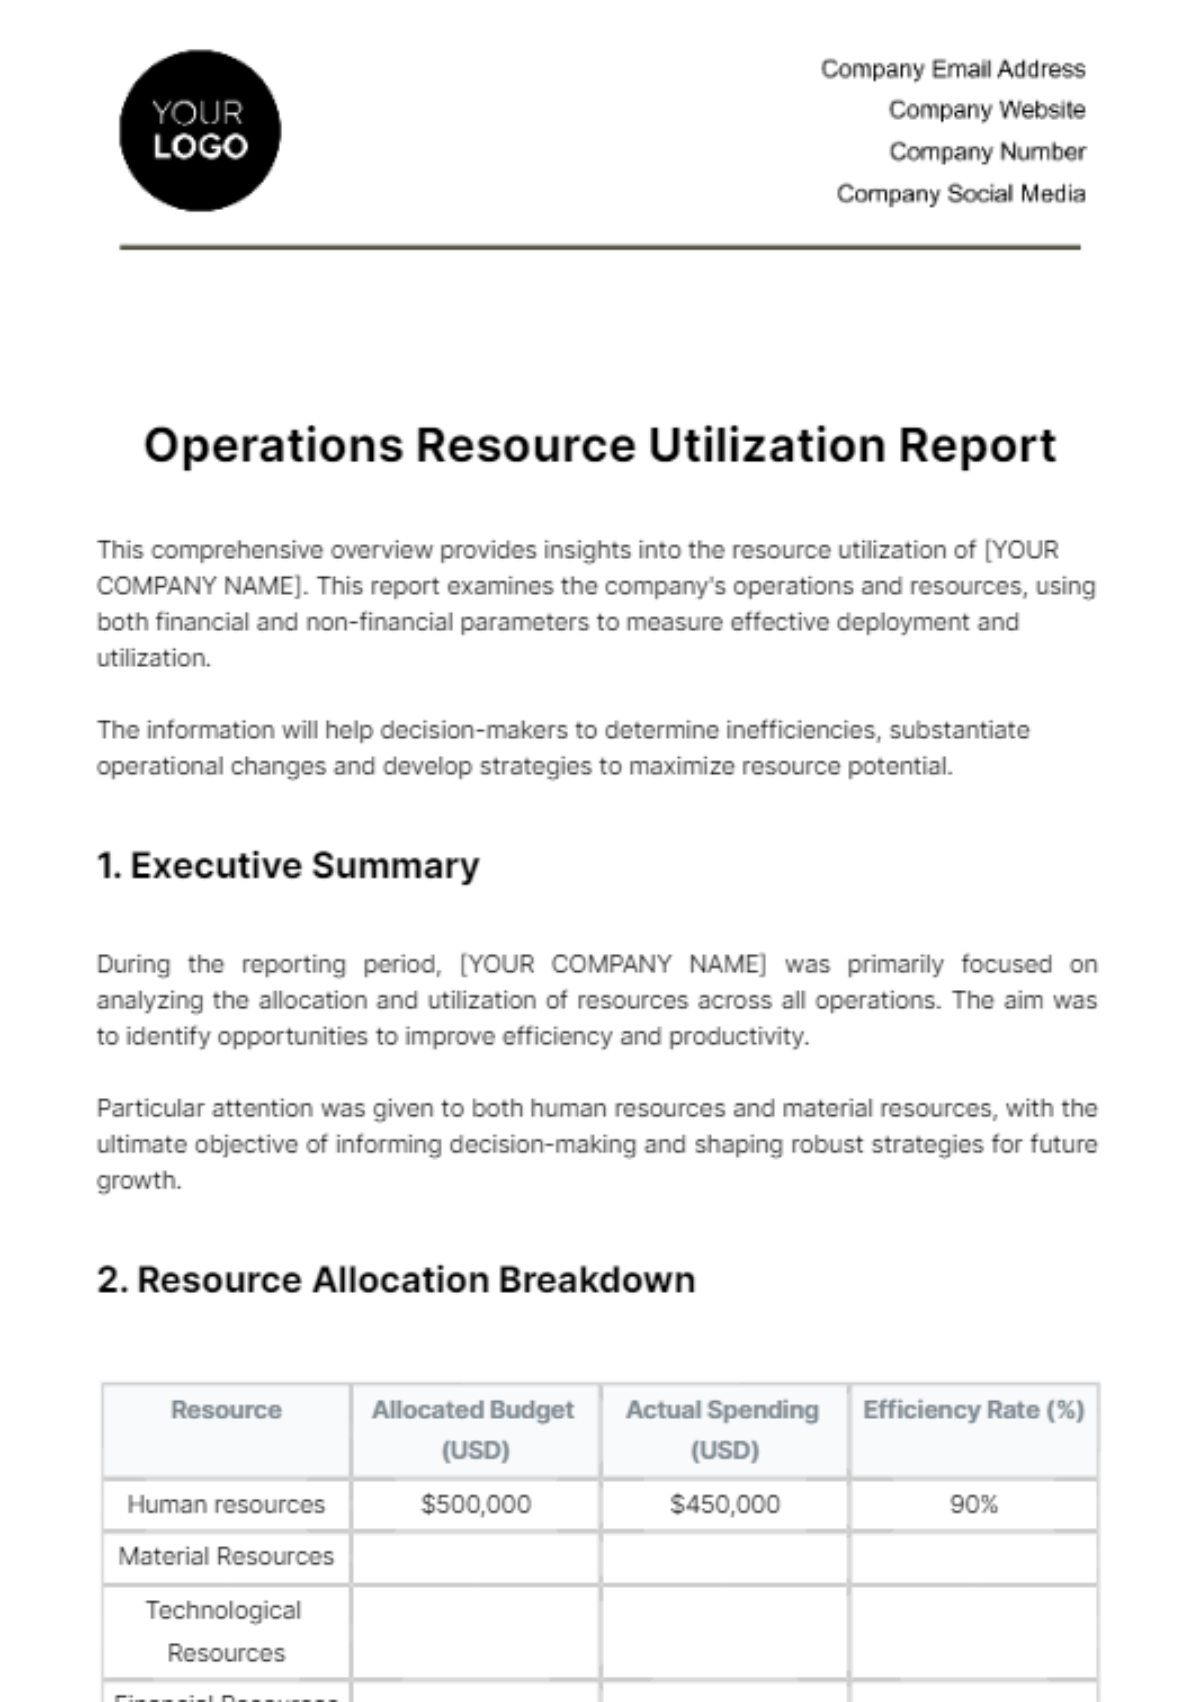 Operations Resource Utilization Report Template